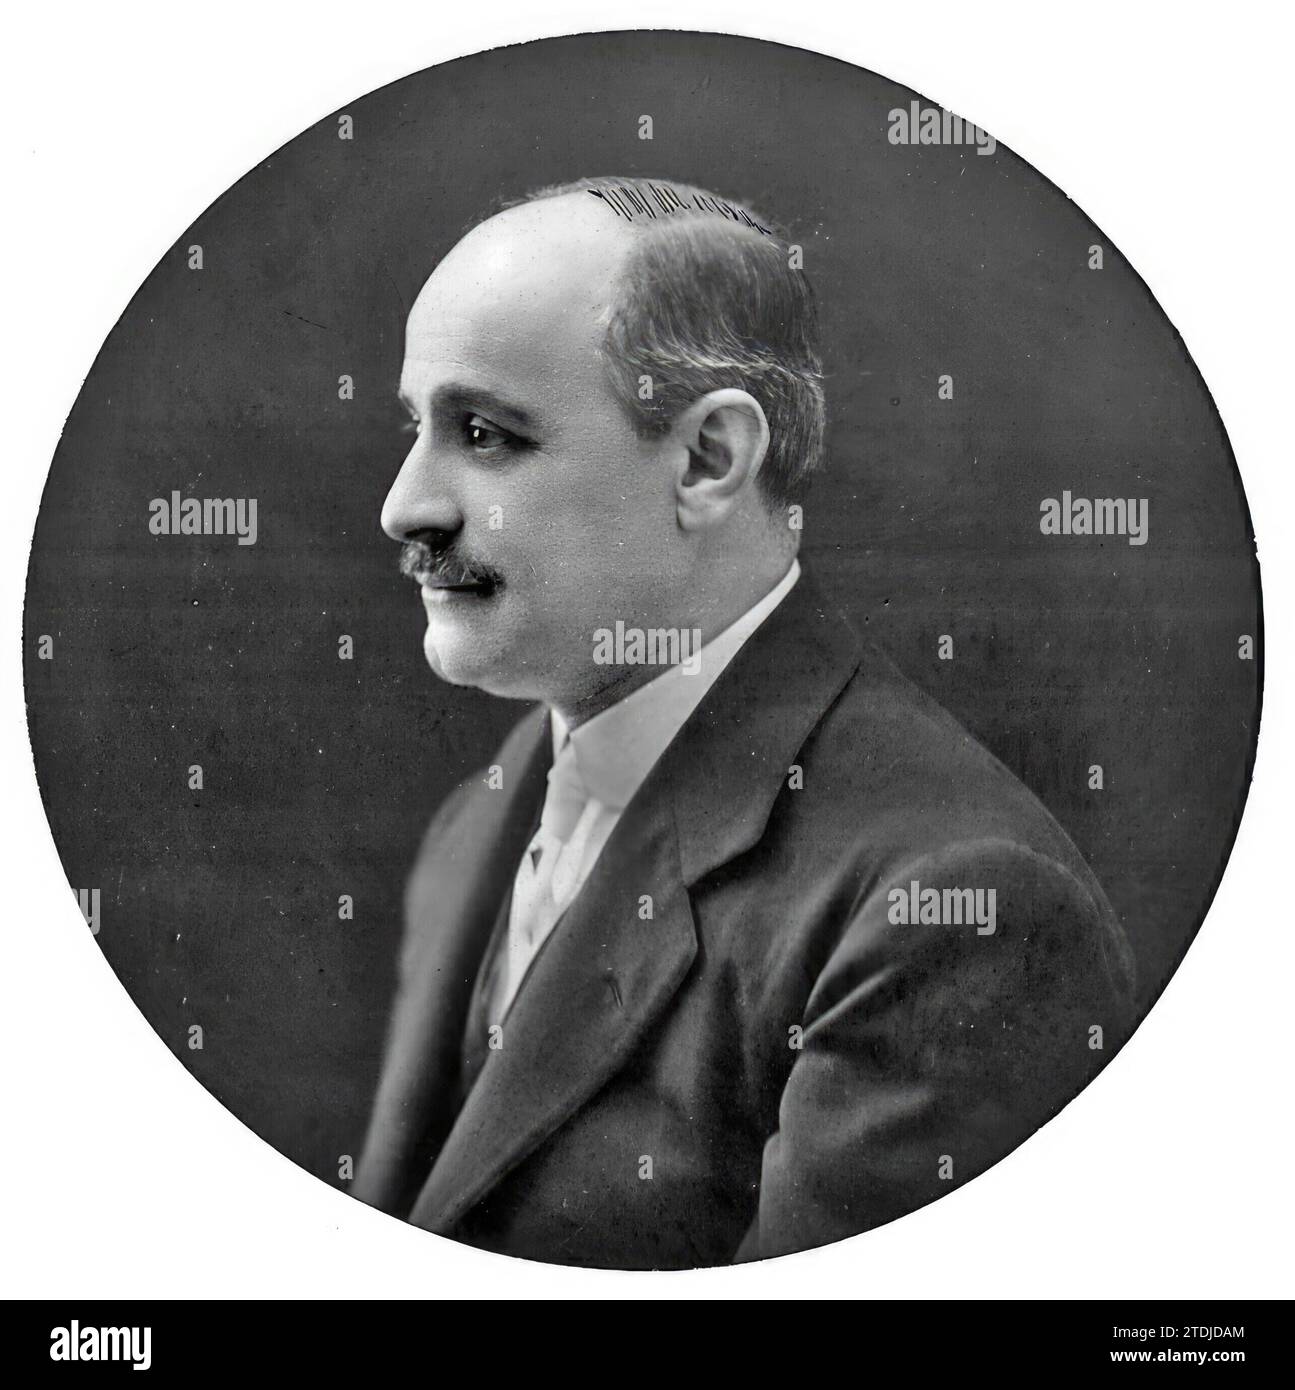 05/31/1912. Xavier Cabello Lapiedra, author of the Comedy "Man Lives Not Alone on Bread" photo LV De Montano - Approximate date. Credit: Album / Archivo ABC Stock Photo